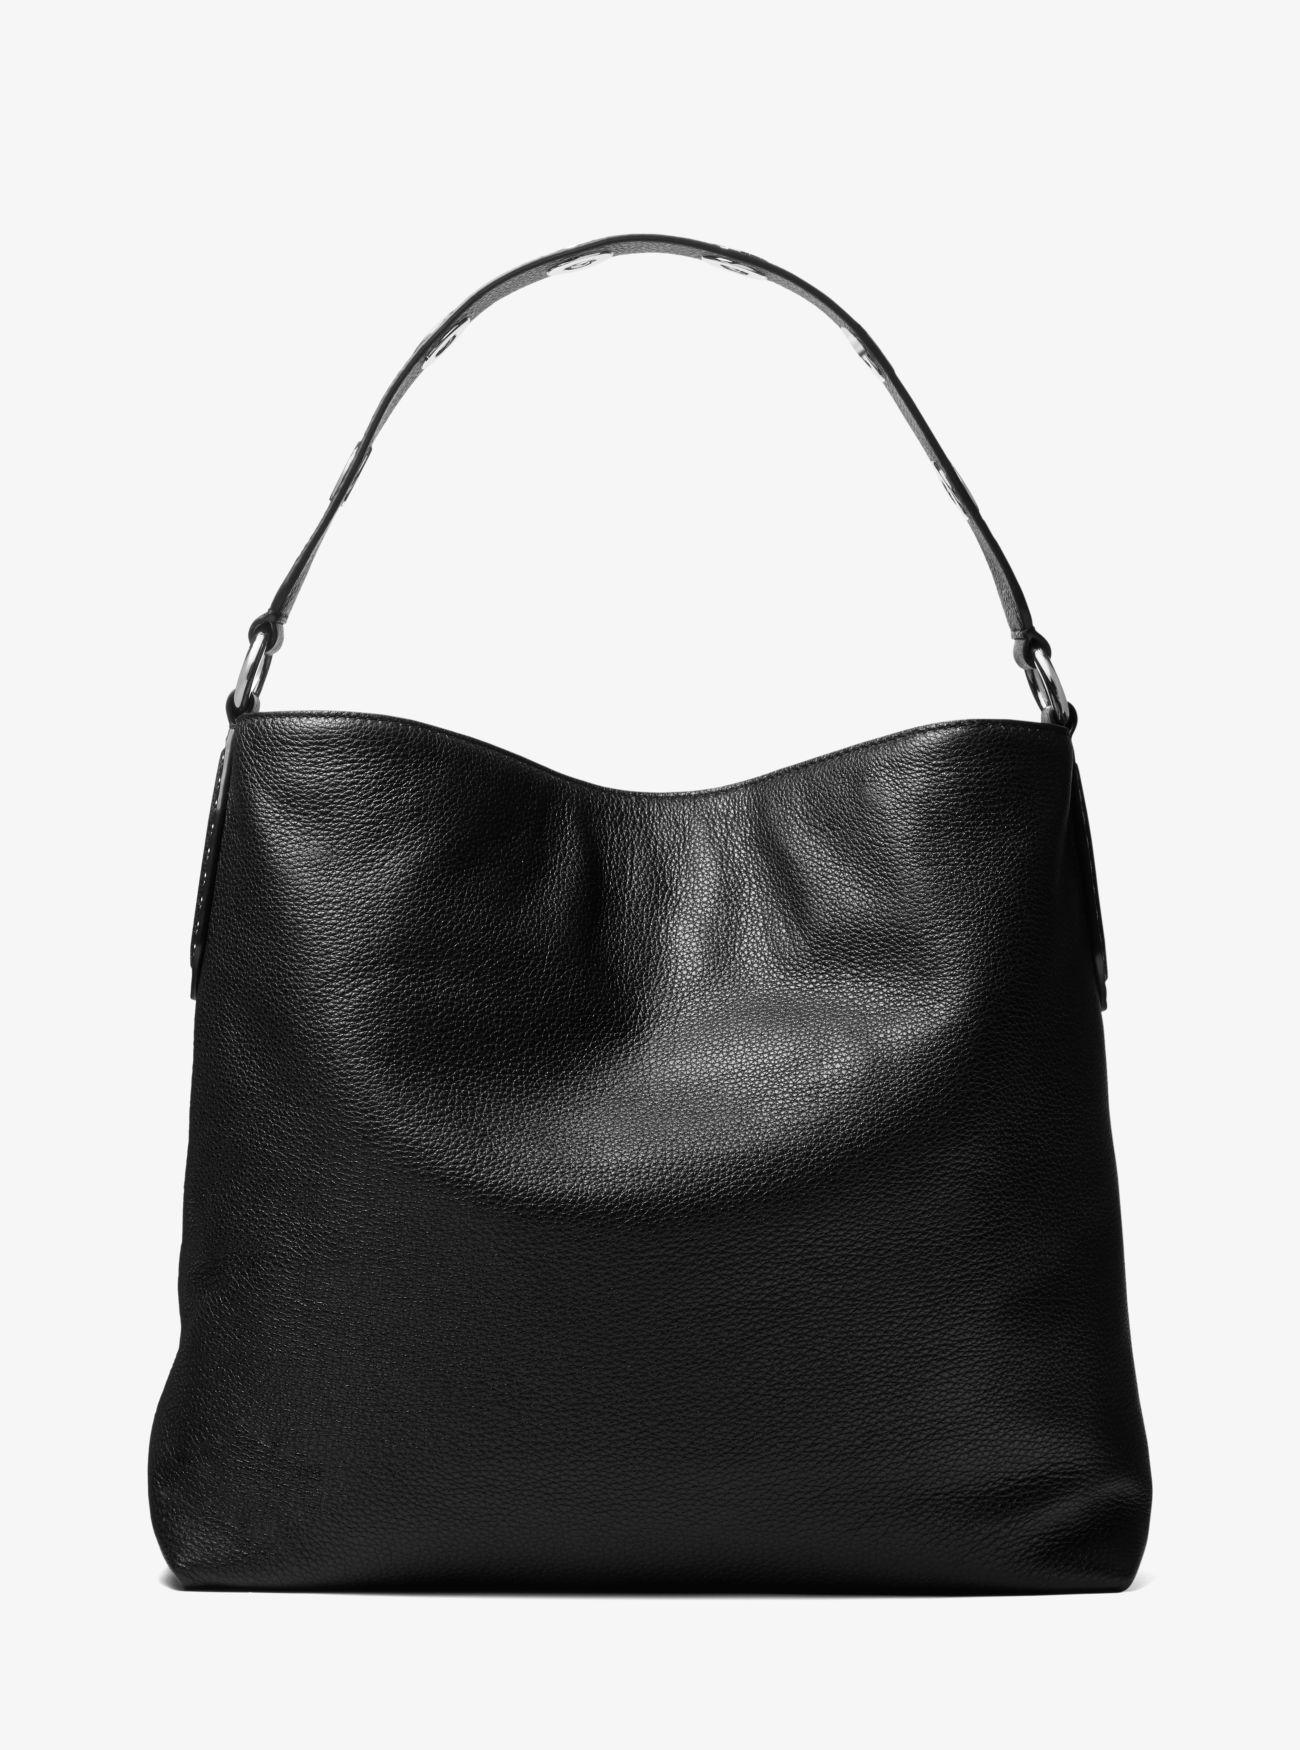 Michael Kors Brooklyn Large Leather Shoulder Bag in Black - Lyst